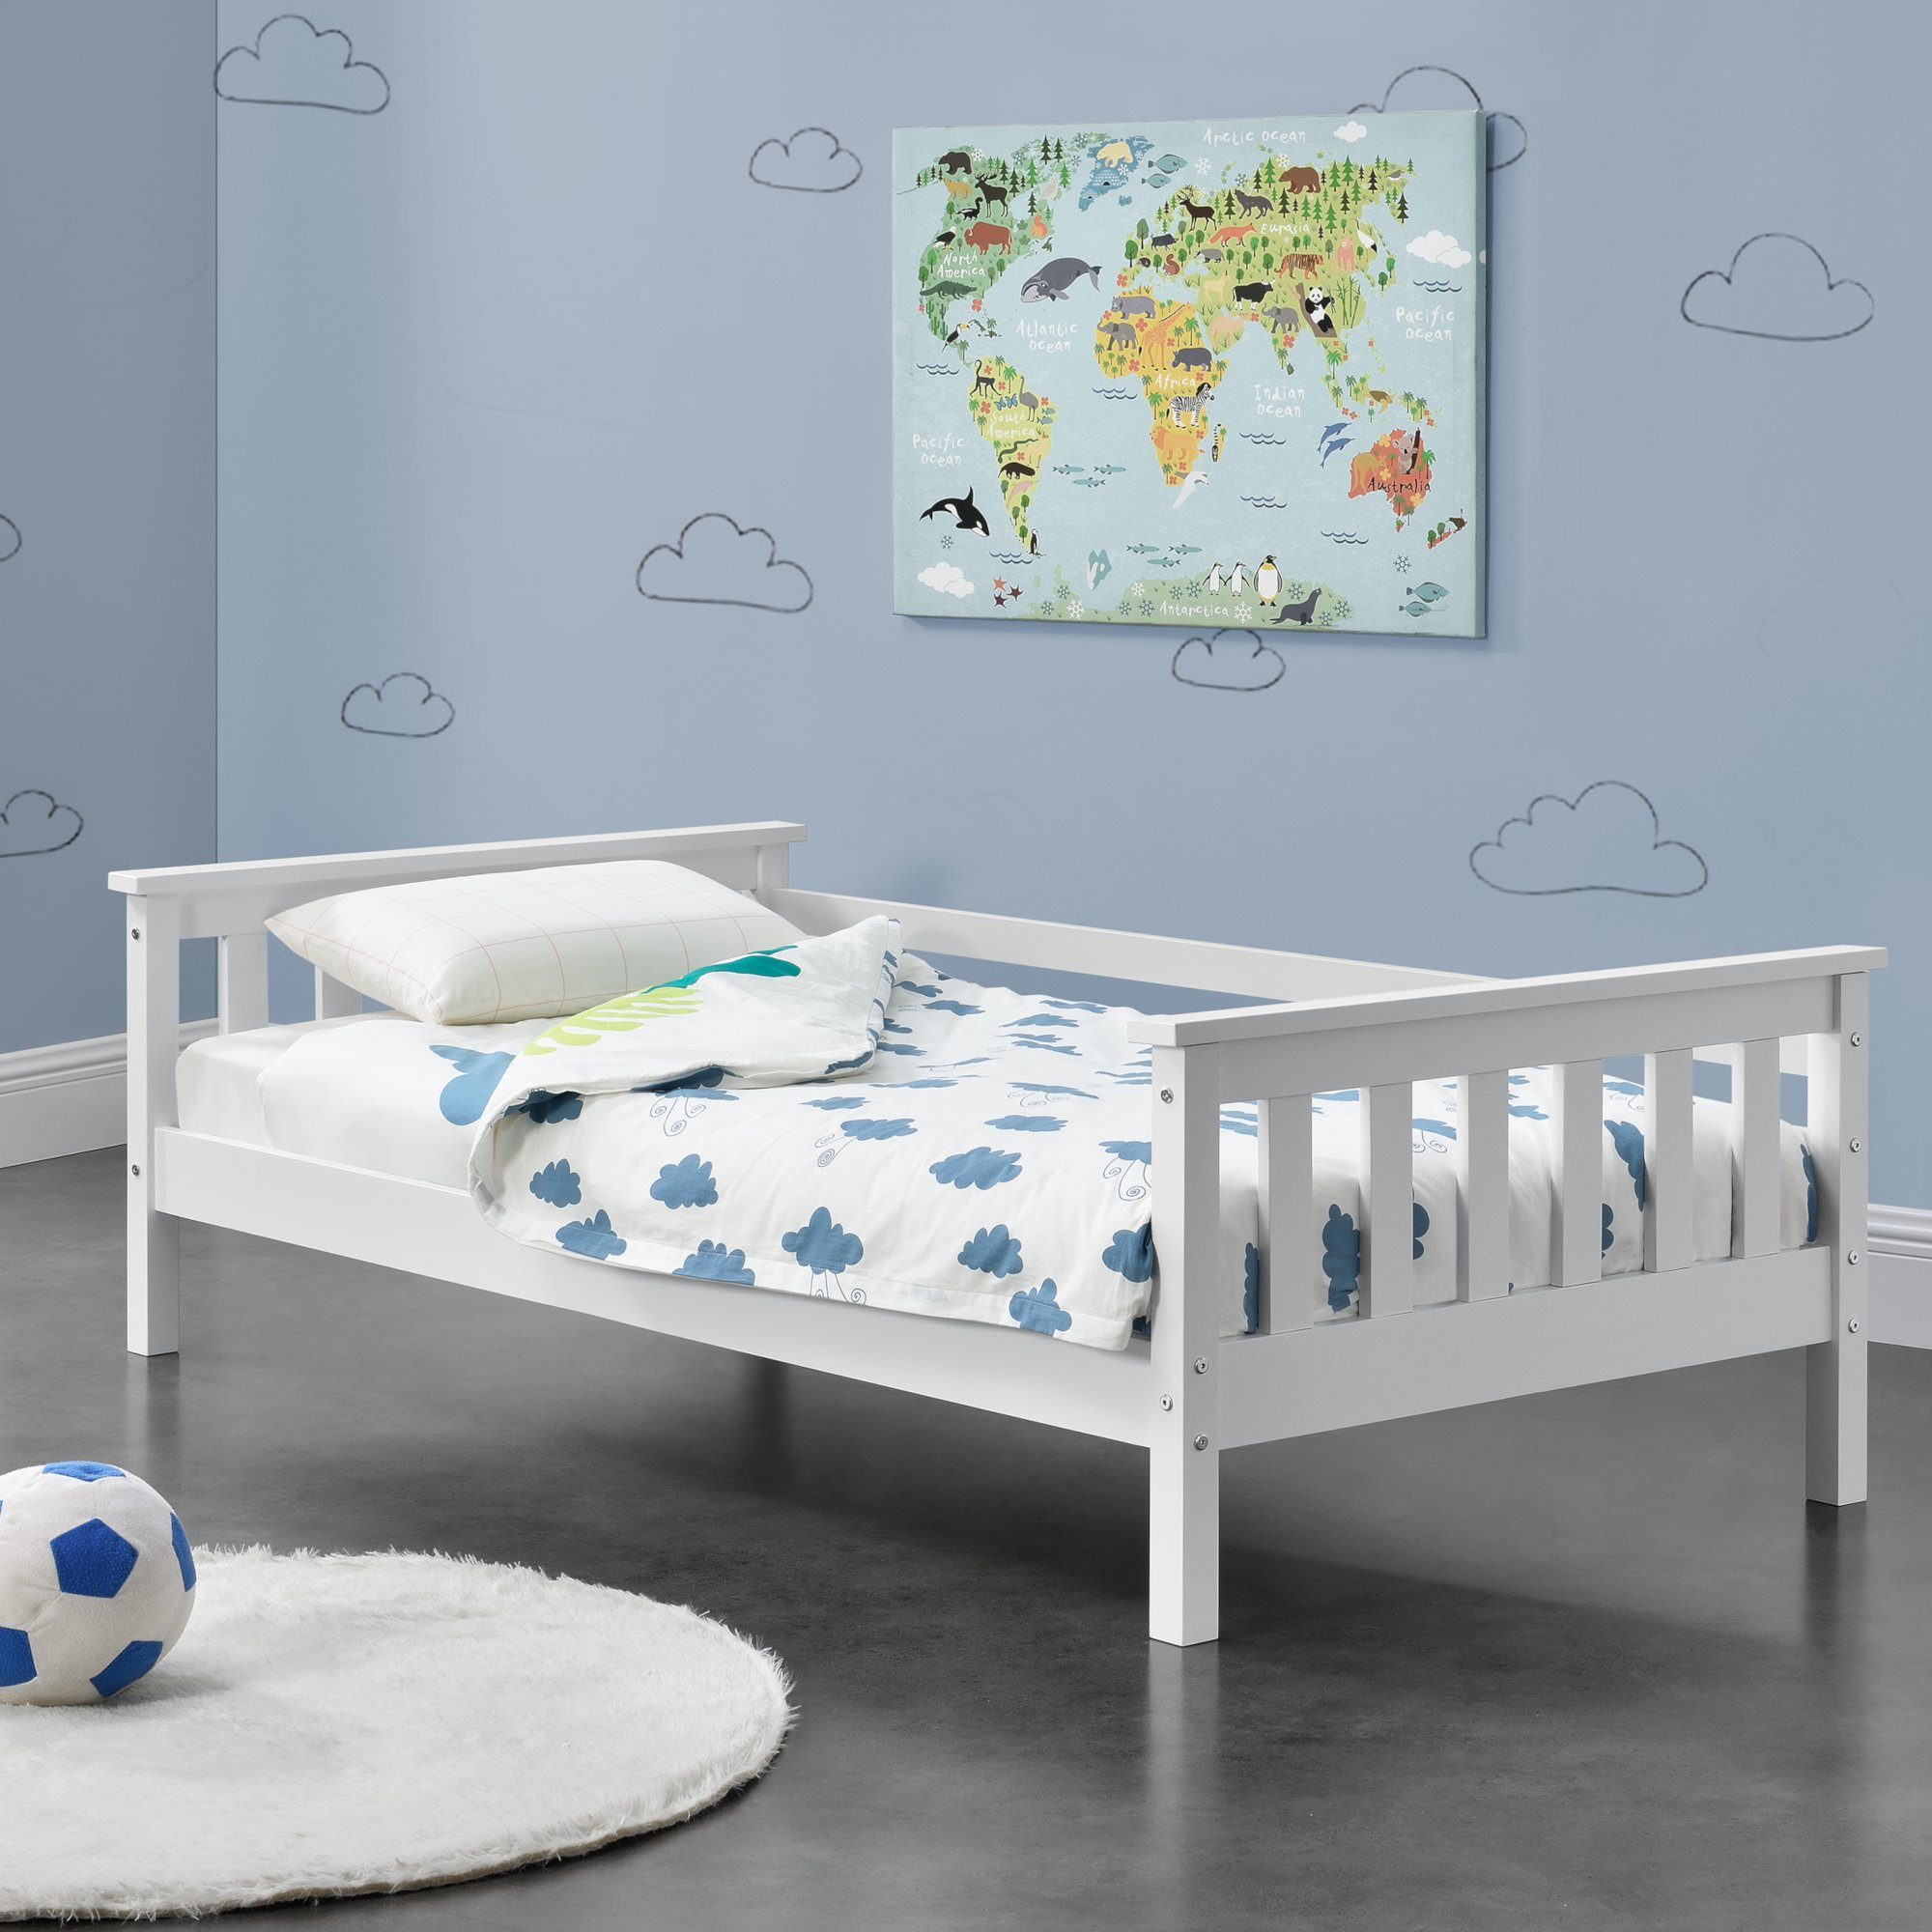 en.casa Kinderbett, »Nuuk« Bett mit Rausfallschutz weiß 70x140cm